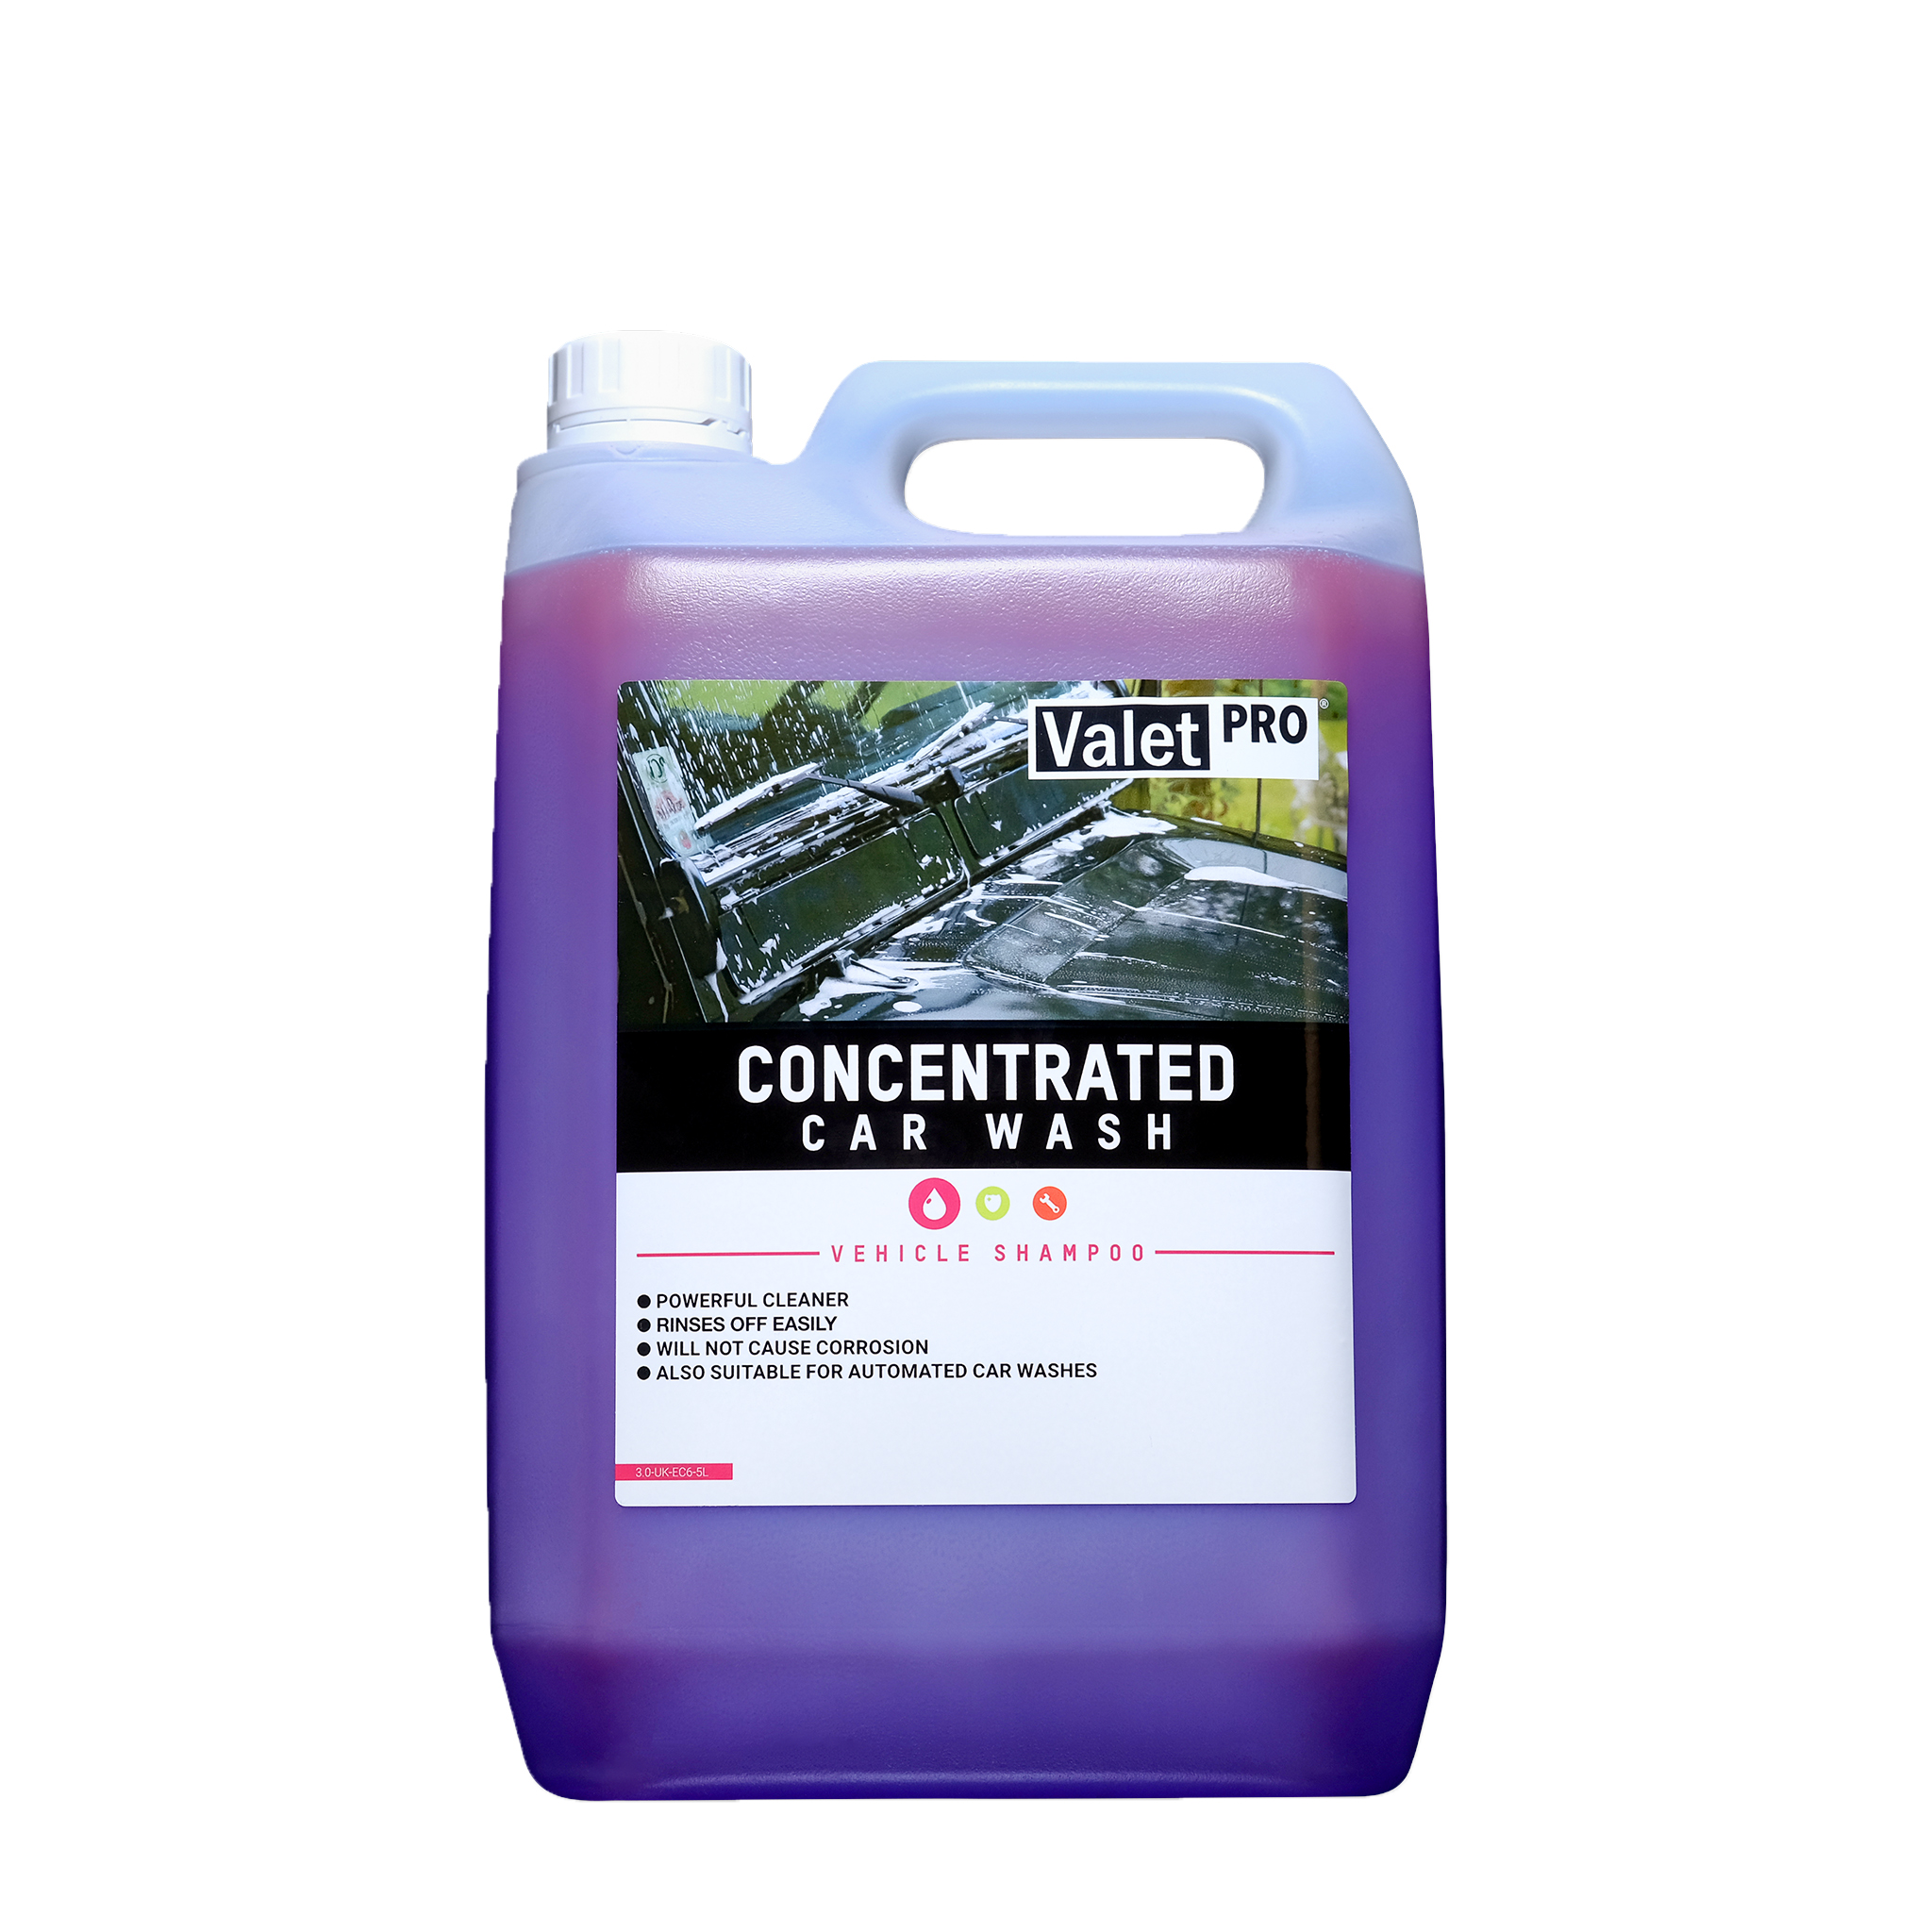 Bilschampo ValetPRO Concentrated Car Wash, 5000 ml / Dunk